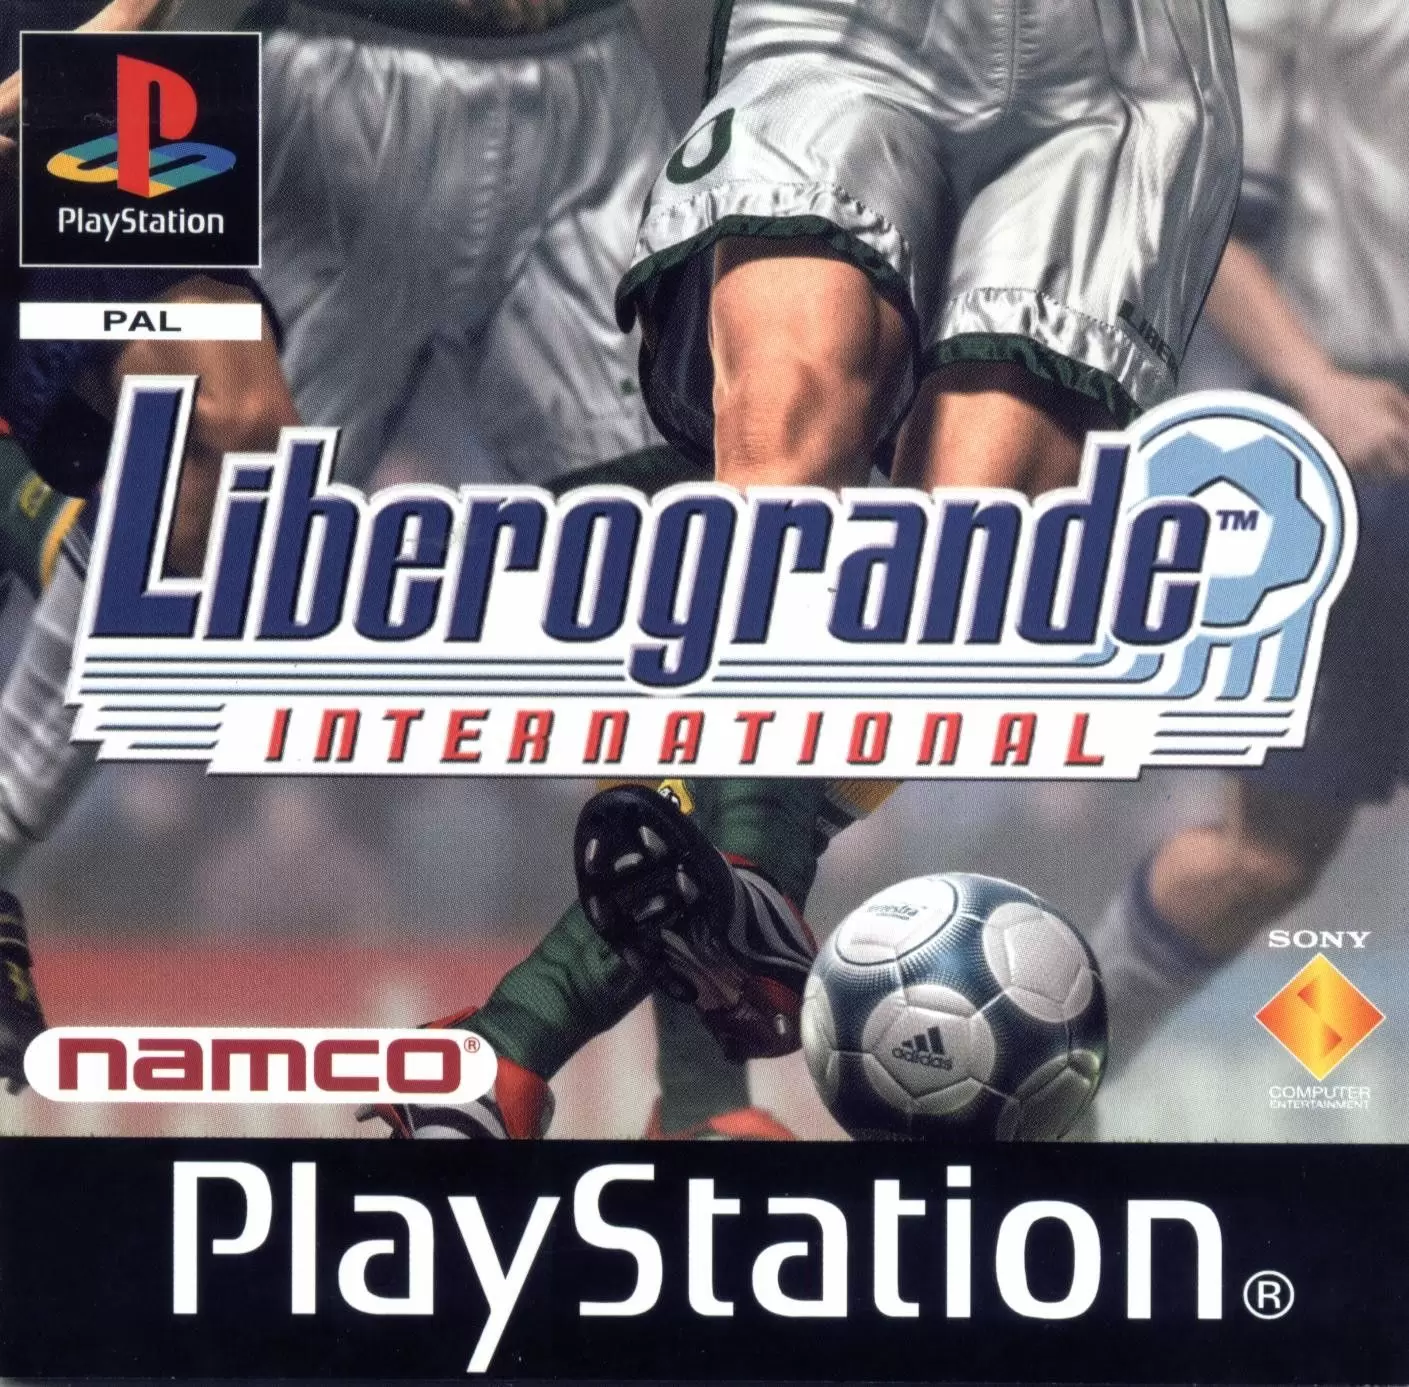 Playstation games - Liberogrande International